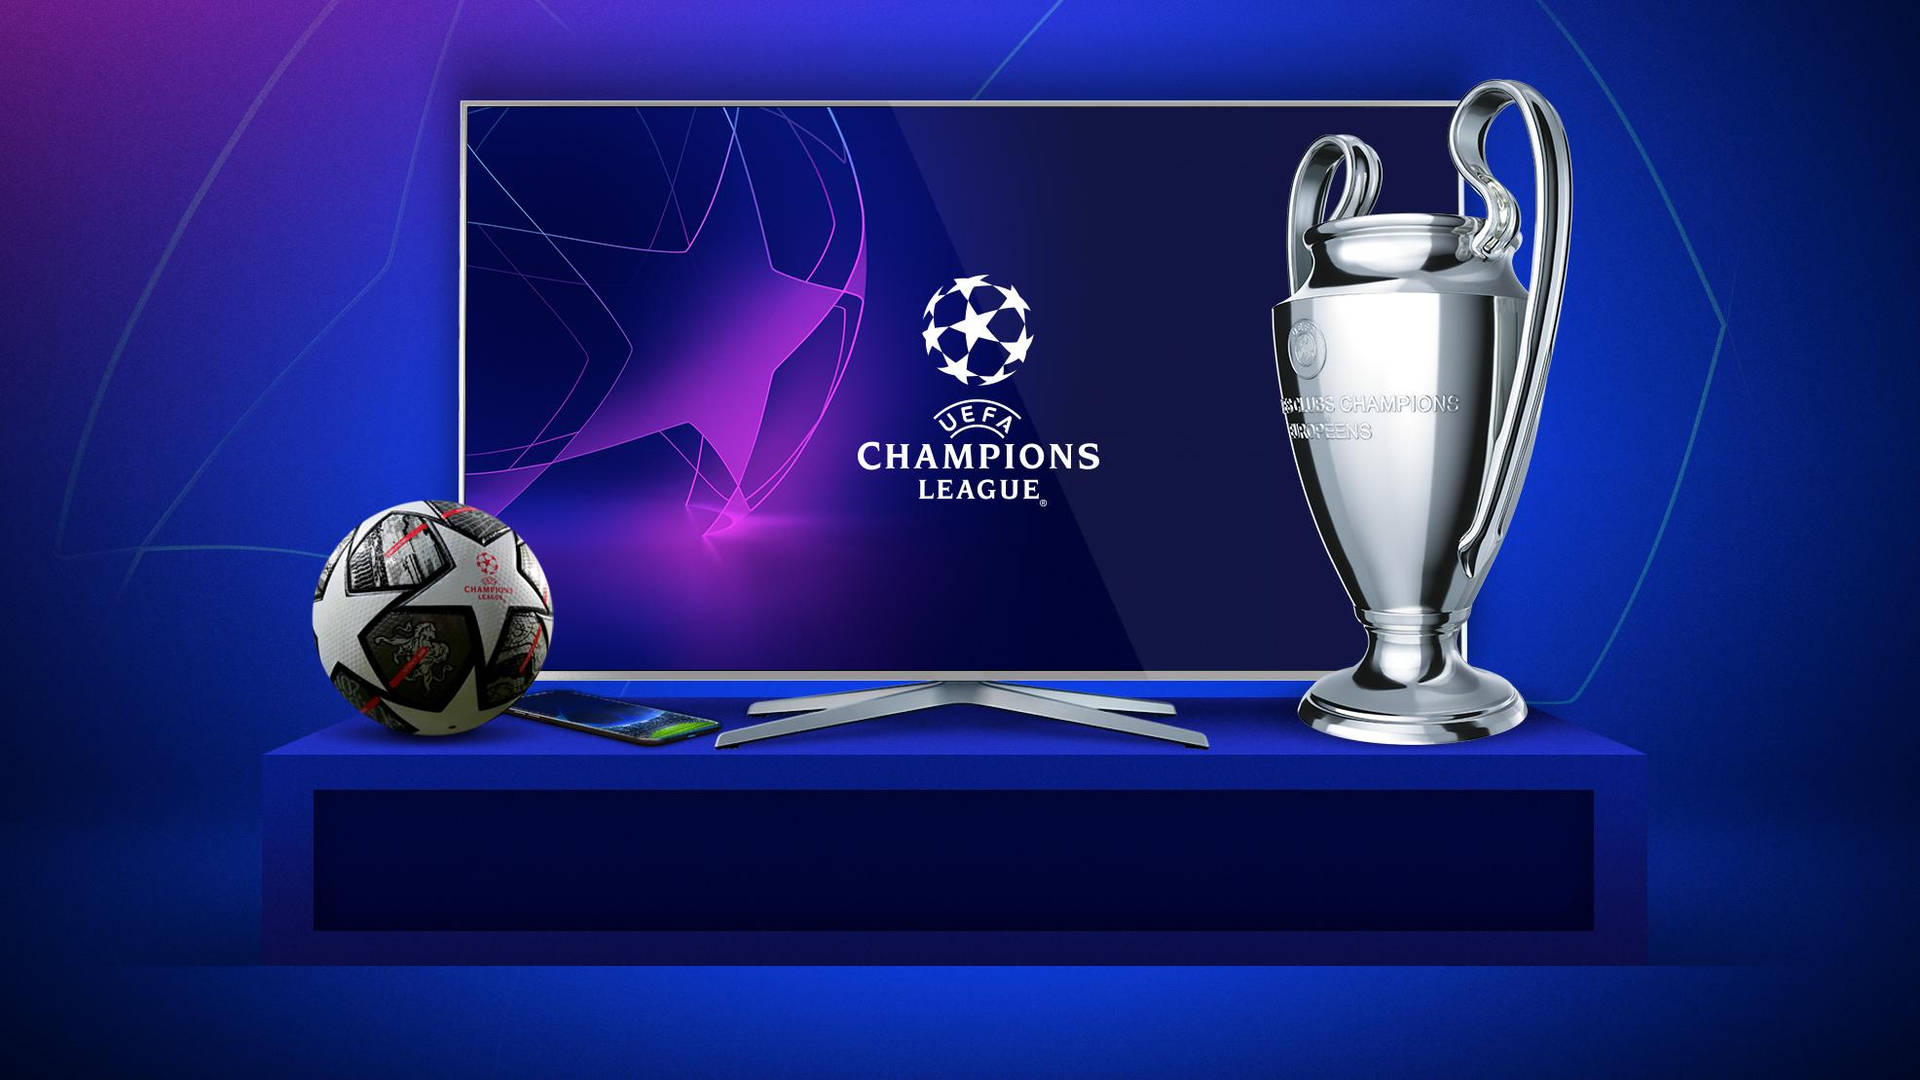 UEFA Champions League TV Marathon Wallpaper